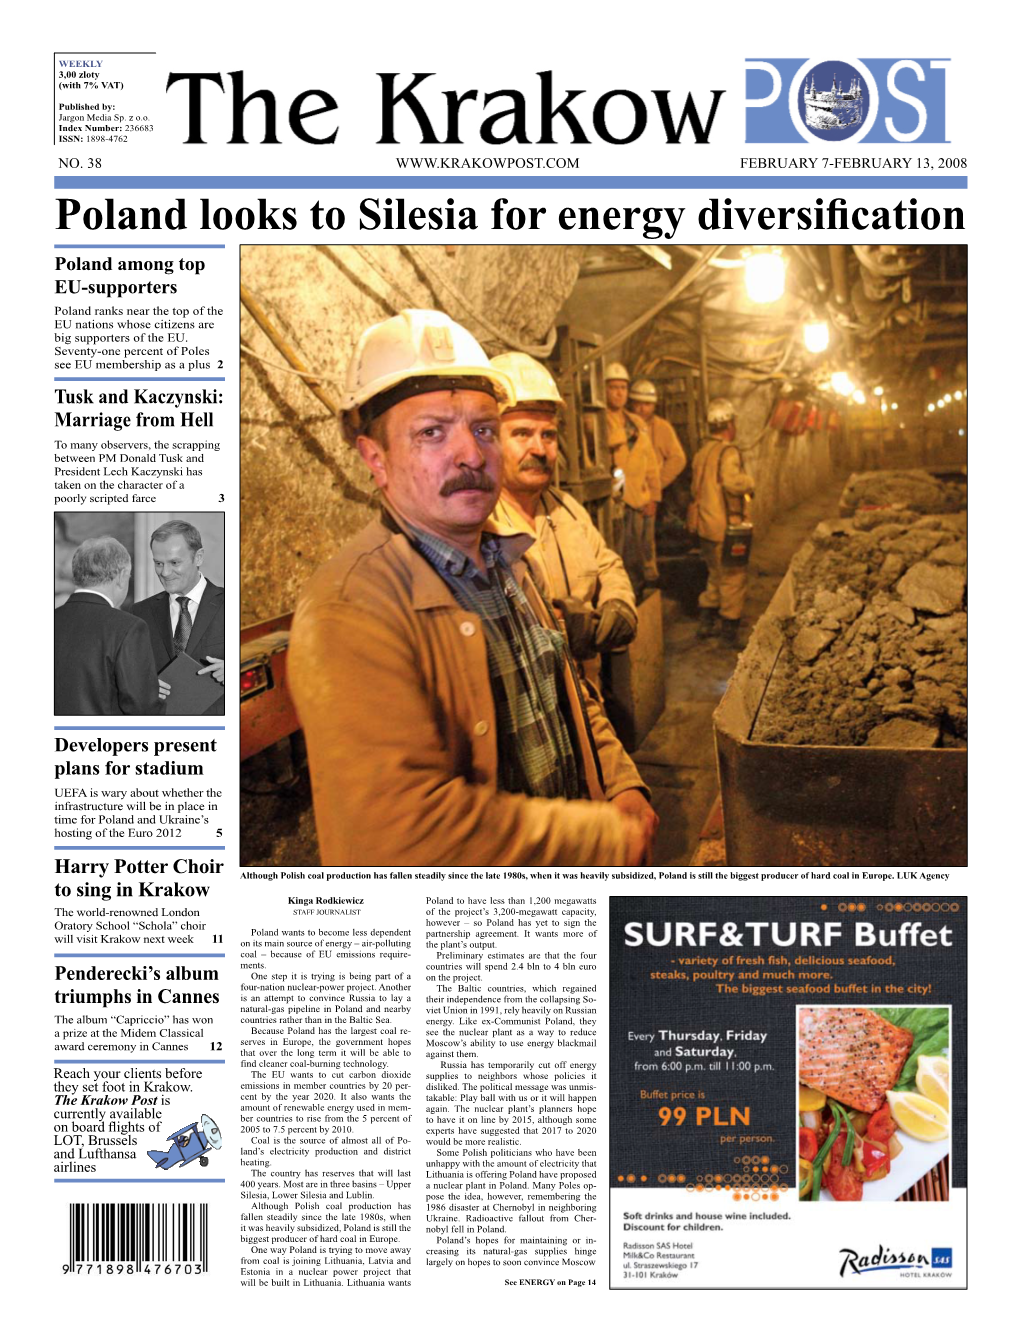 Poland Looks to Silesia for Energy Diversification